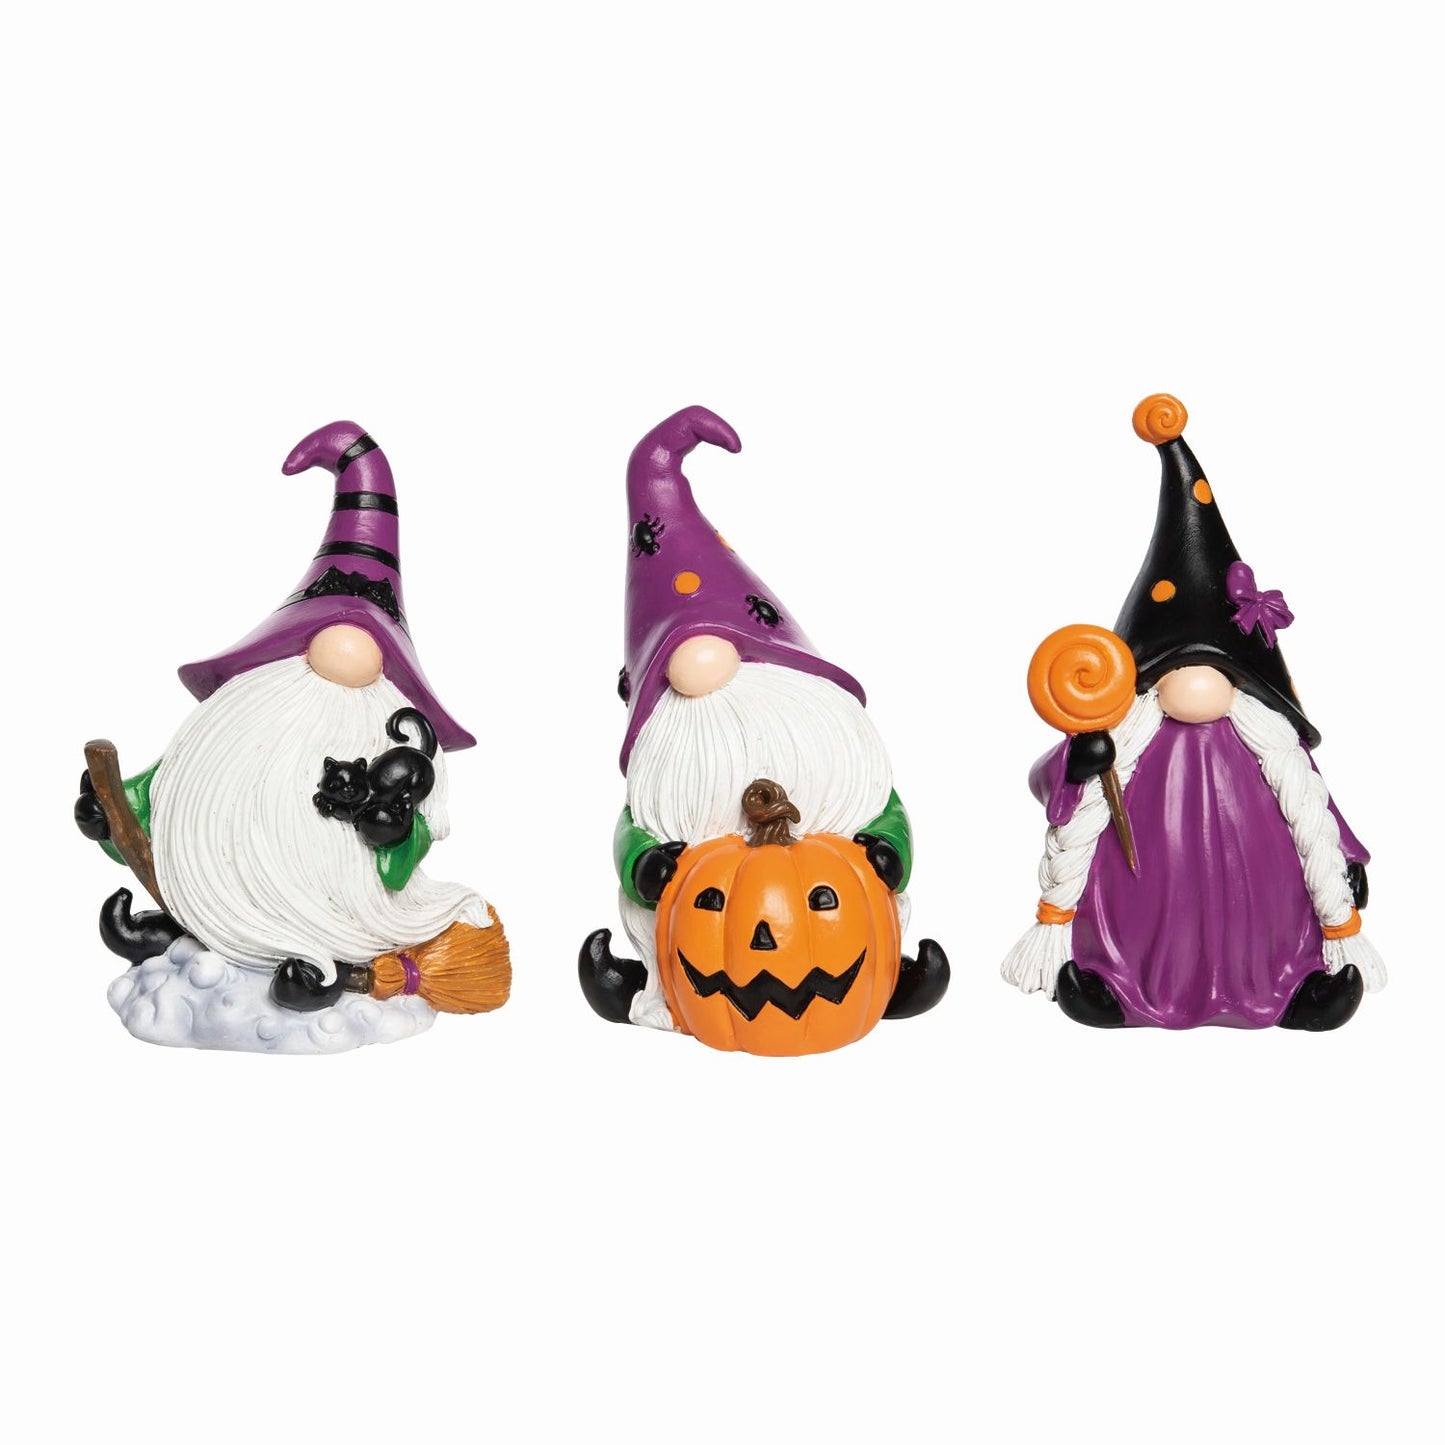 Transpac Resin Halloween Whimsical Gnome Figurine, Set Of 3, Assortment